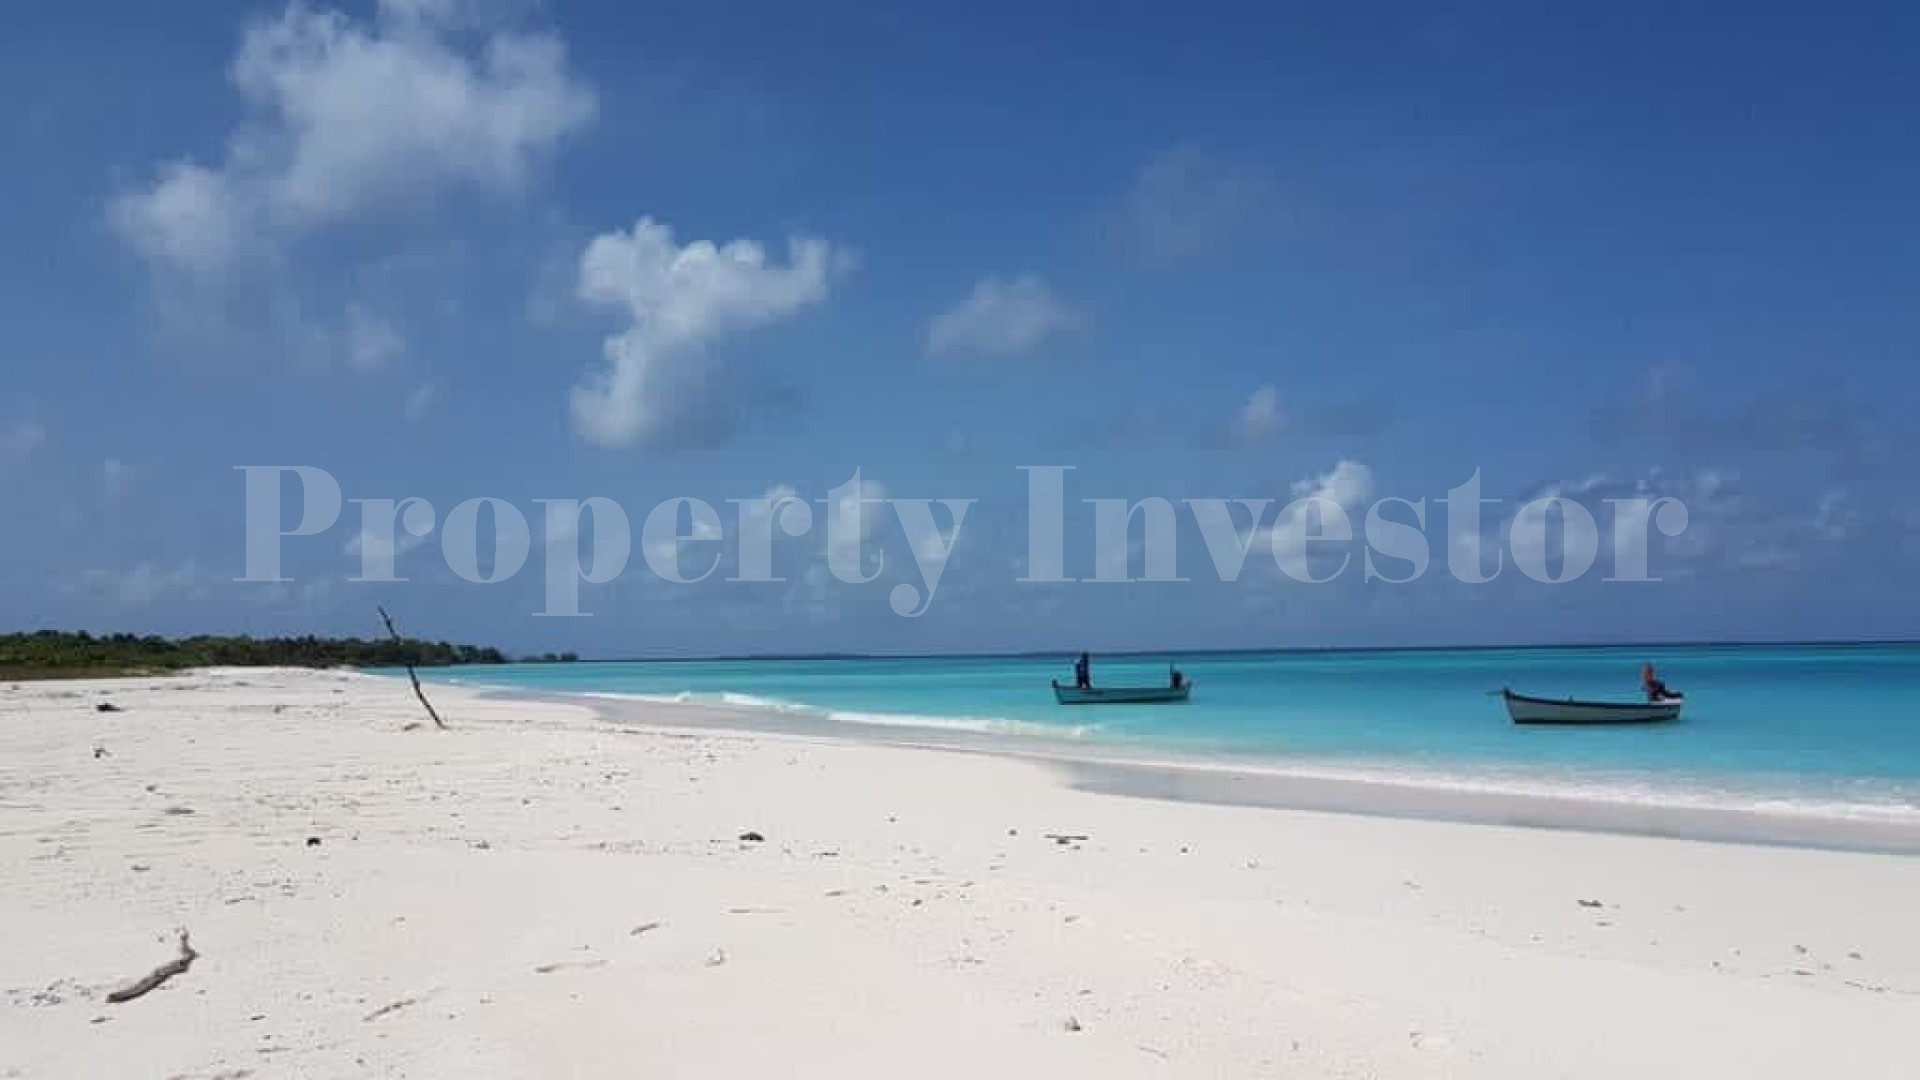 Pristine 14.9 Hectare Private Virgin Island with 1.75 Kilometers of Beaches for Sale in the Maldives